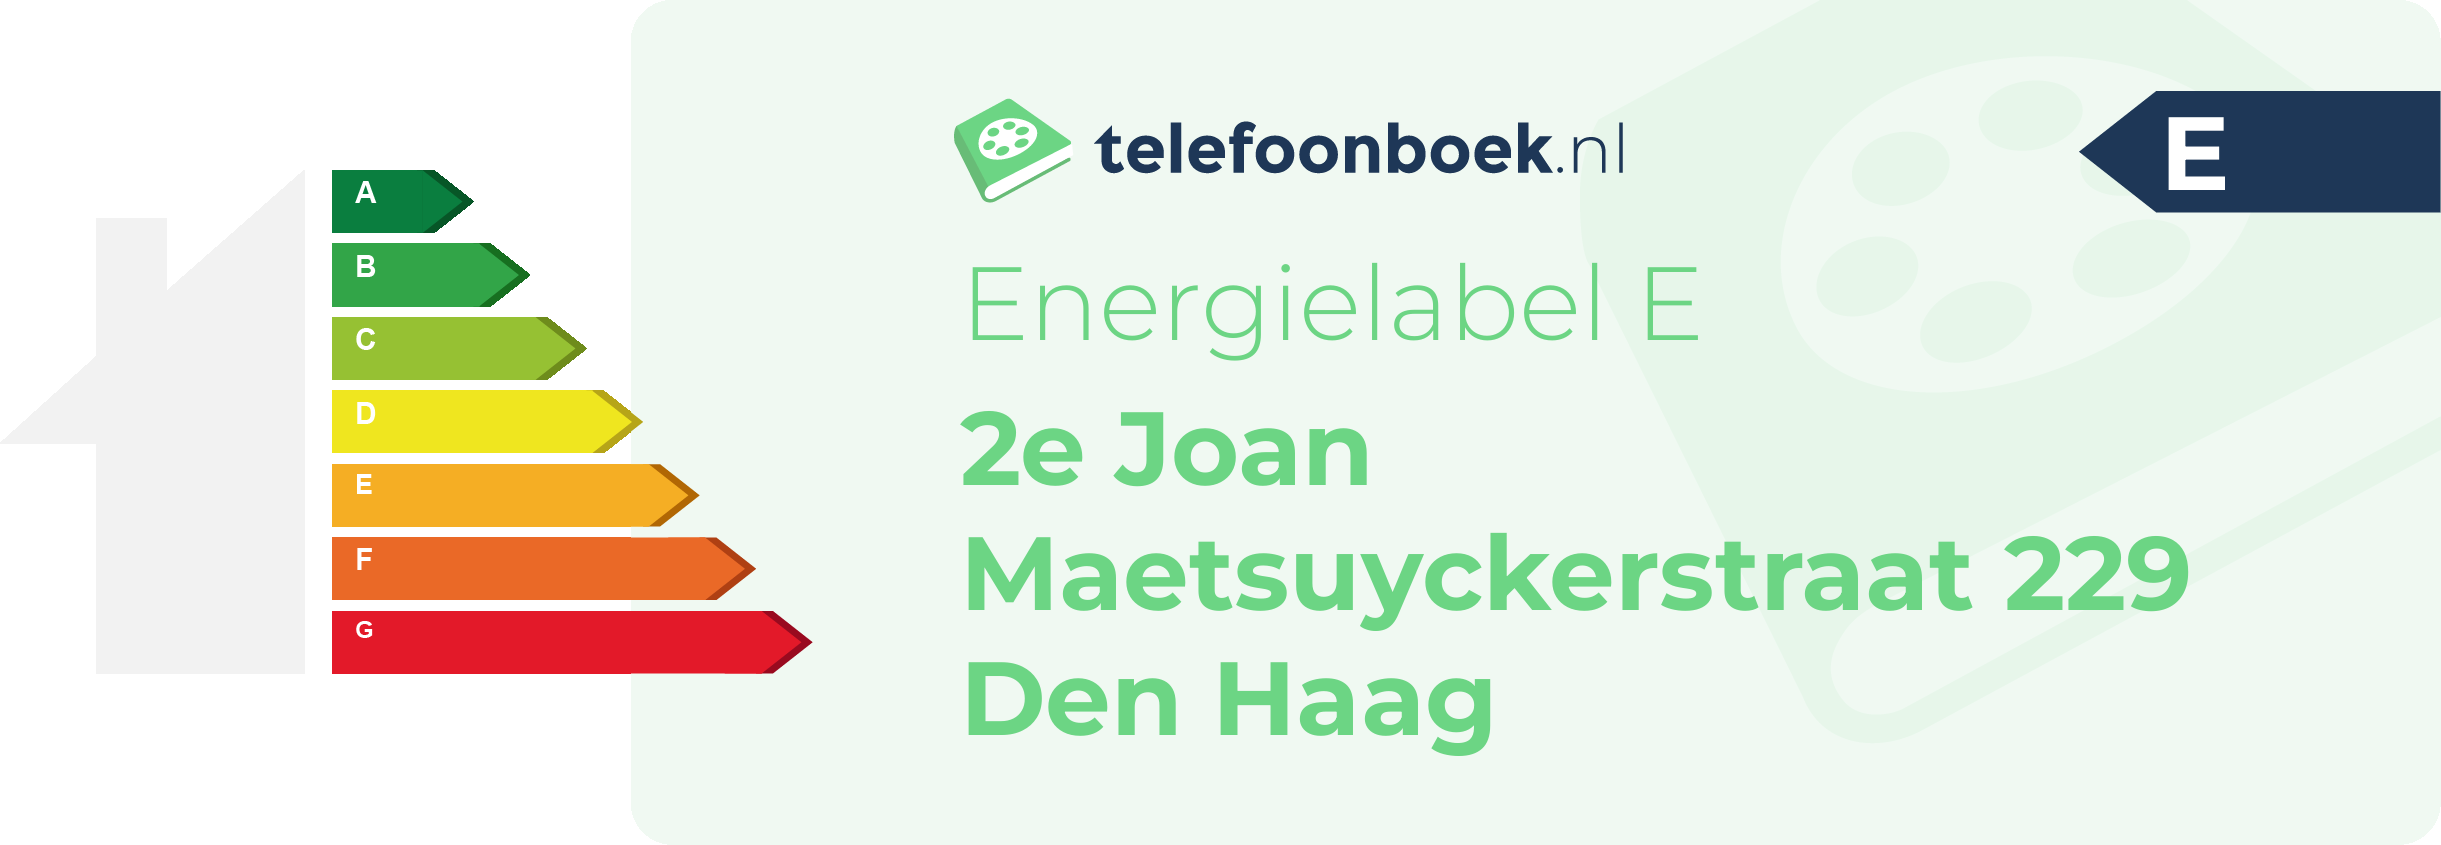 Energielabel 2e Joan Maetsuyckerstraat 229 Den Haag